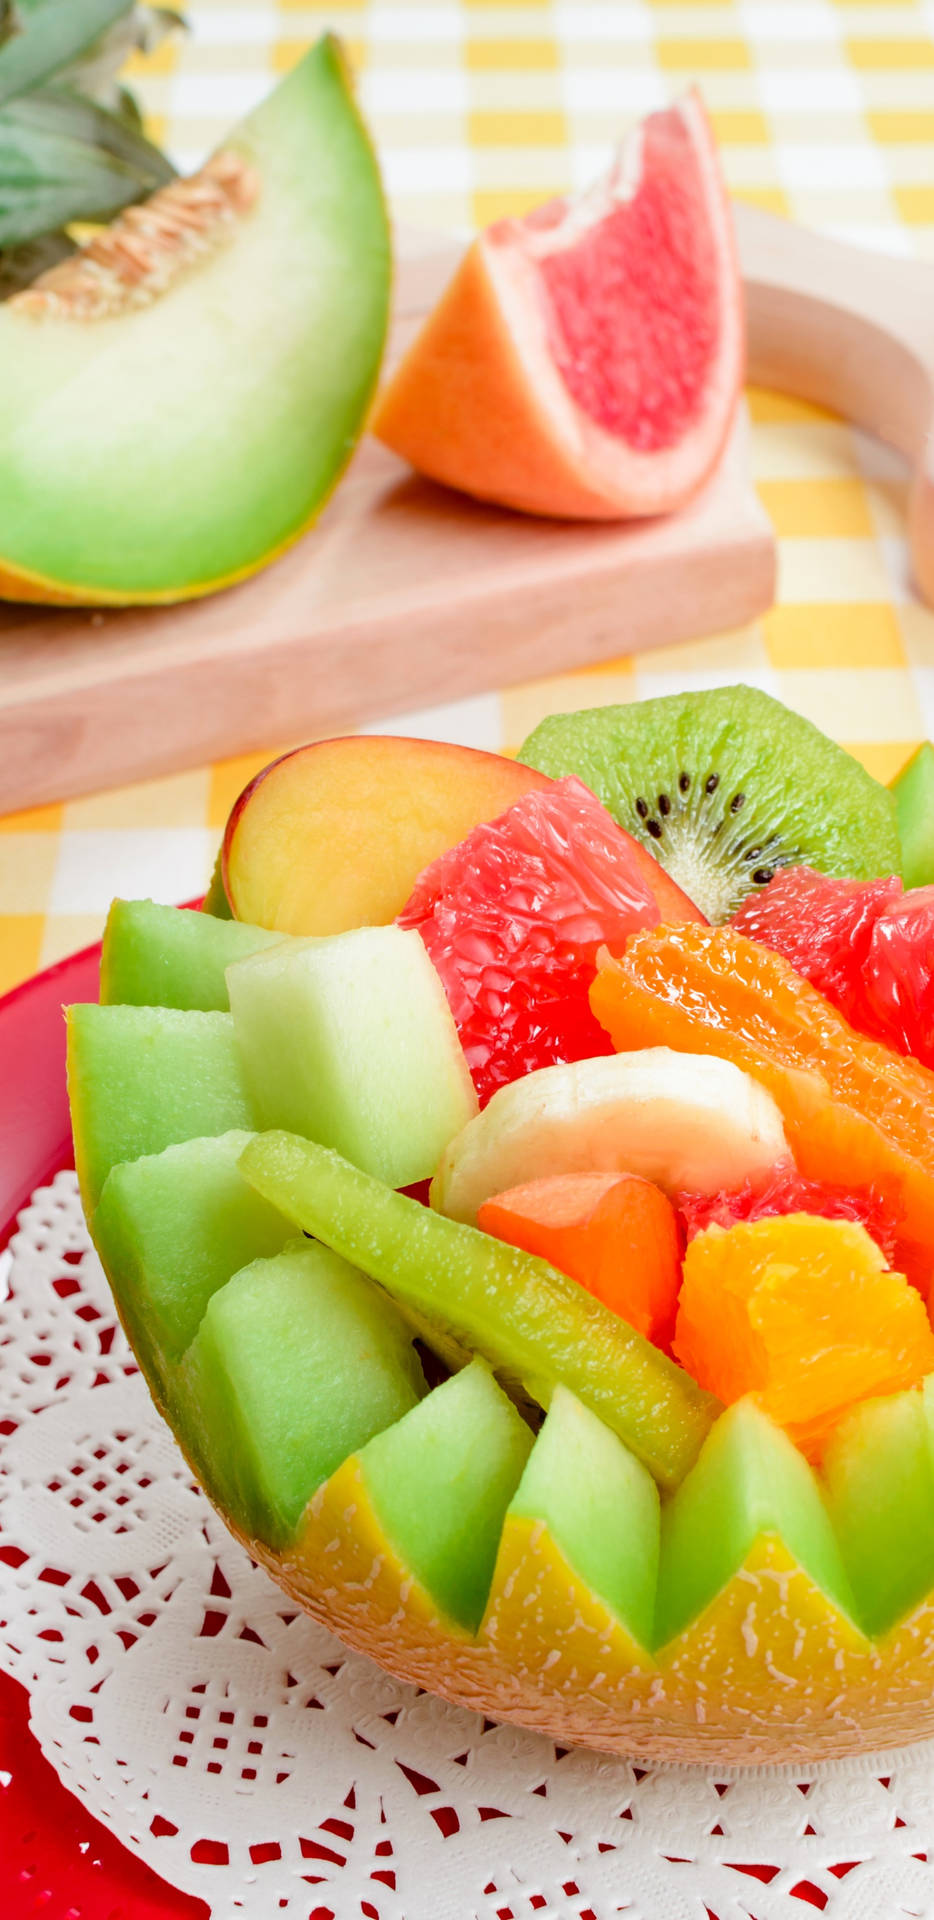 Honeydew Melon Fruit Salad Wallpaper